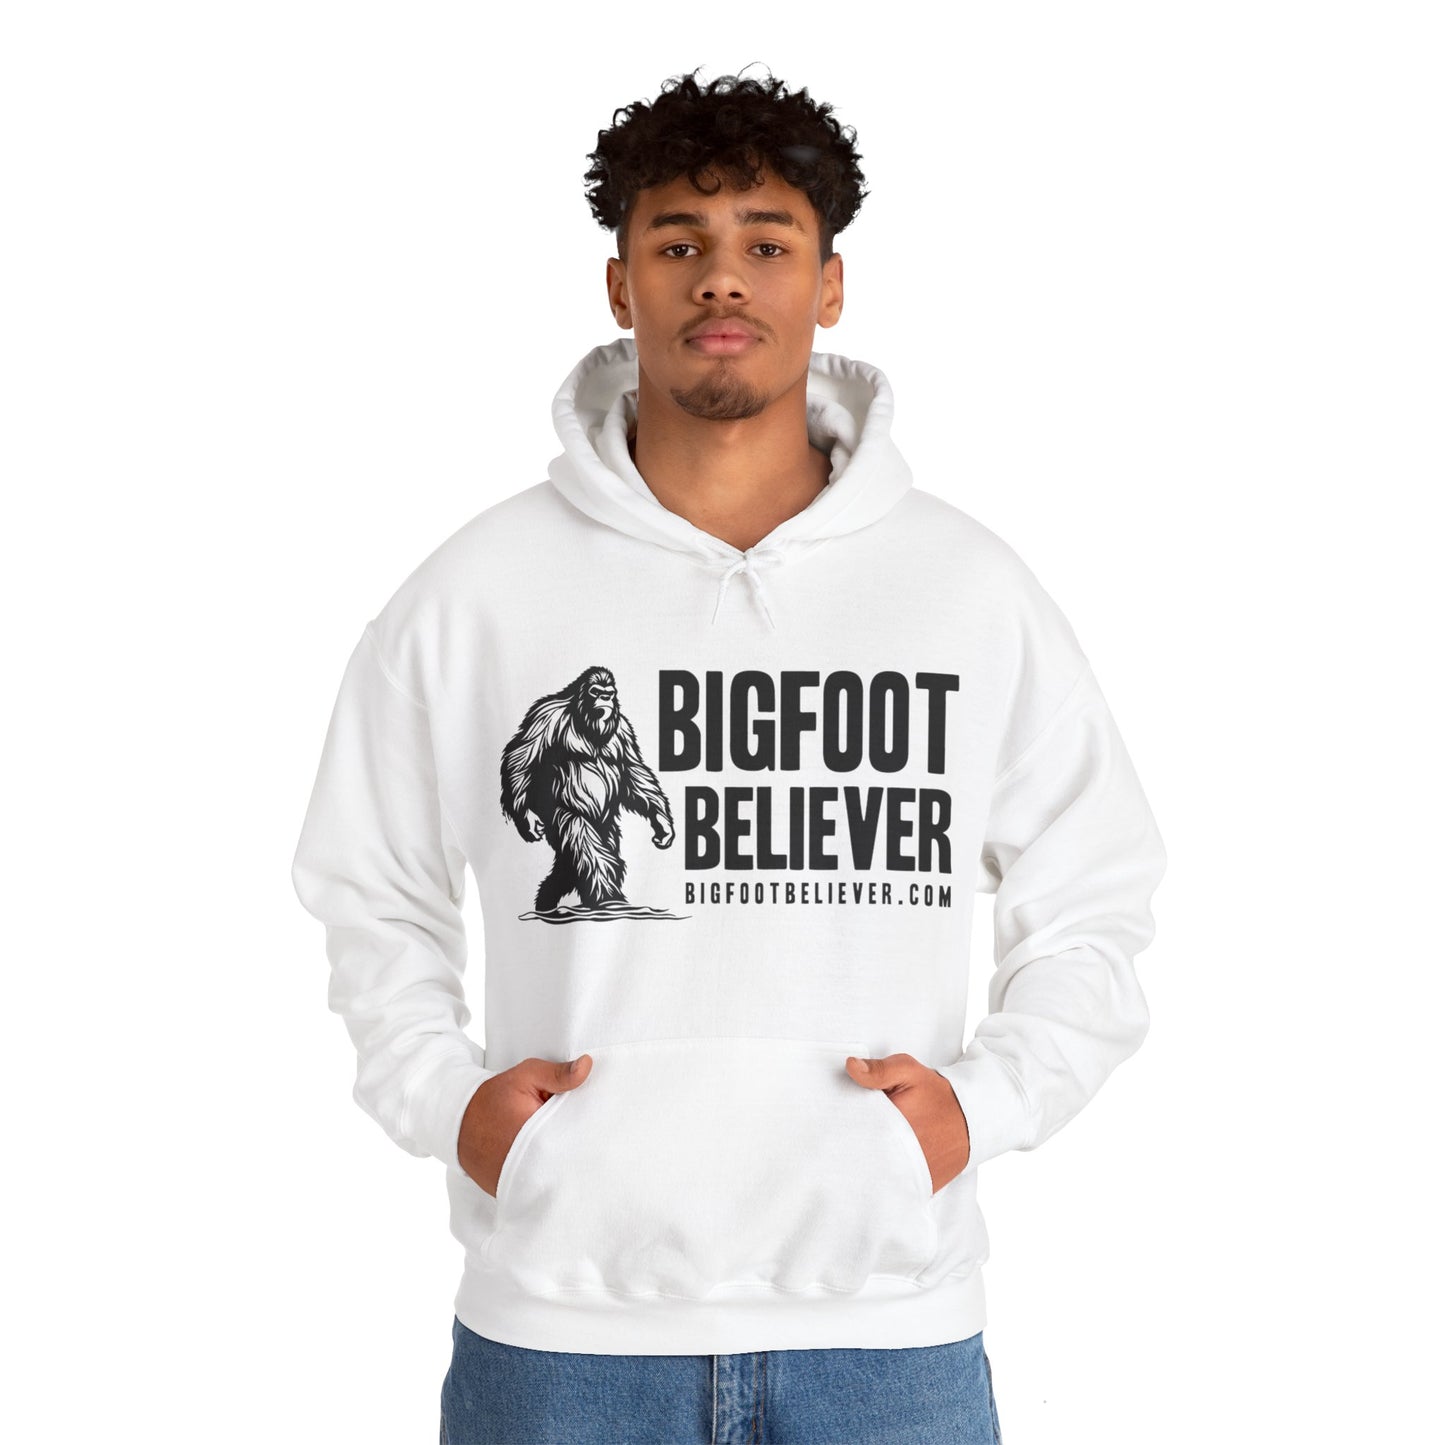 Bigfoot Believer. Unisex Adult Hooded Heavy Blend Sweatshirt